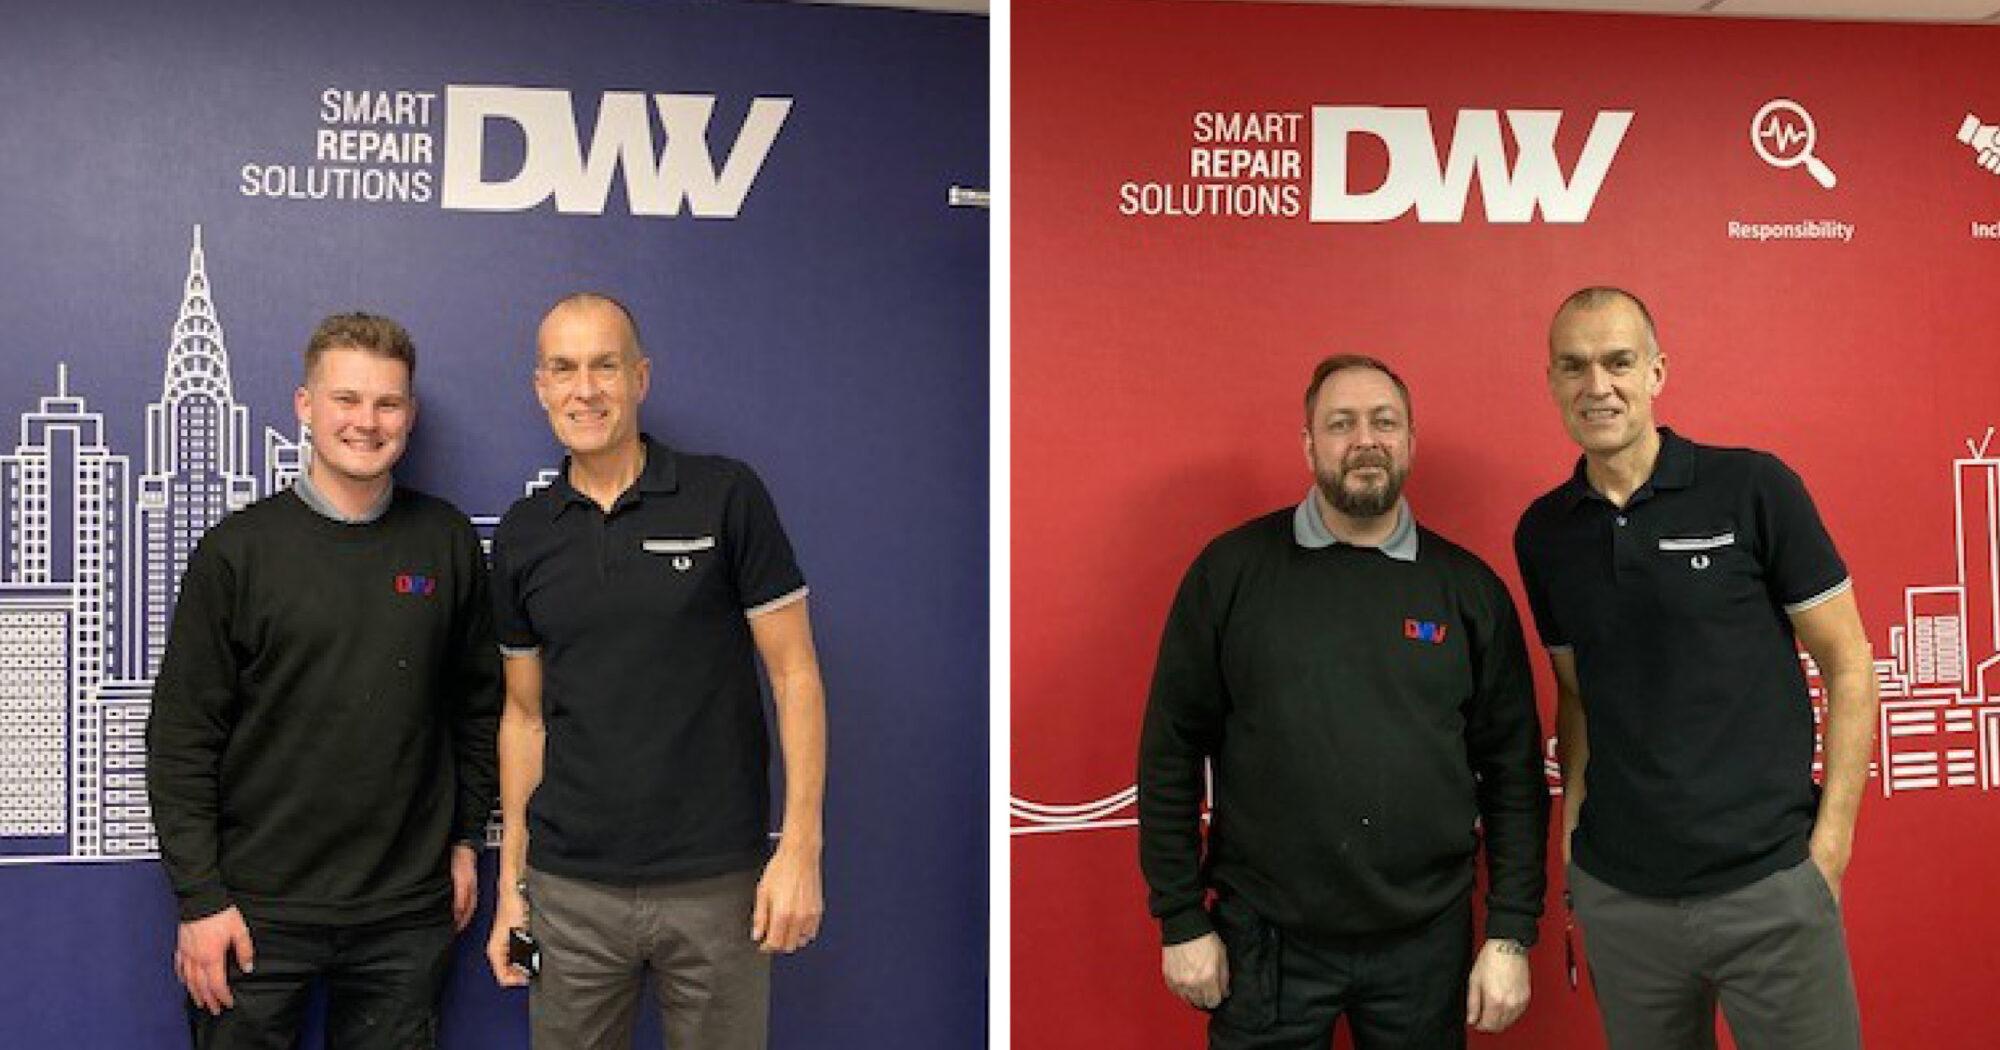 DWV’s technician team grows